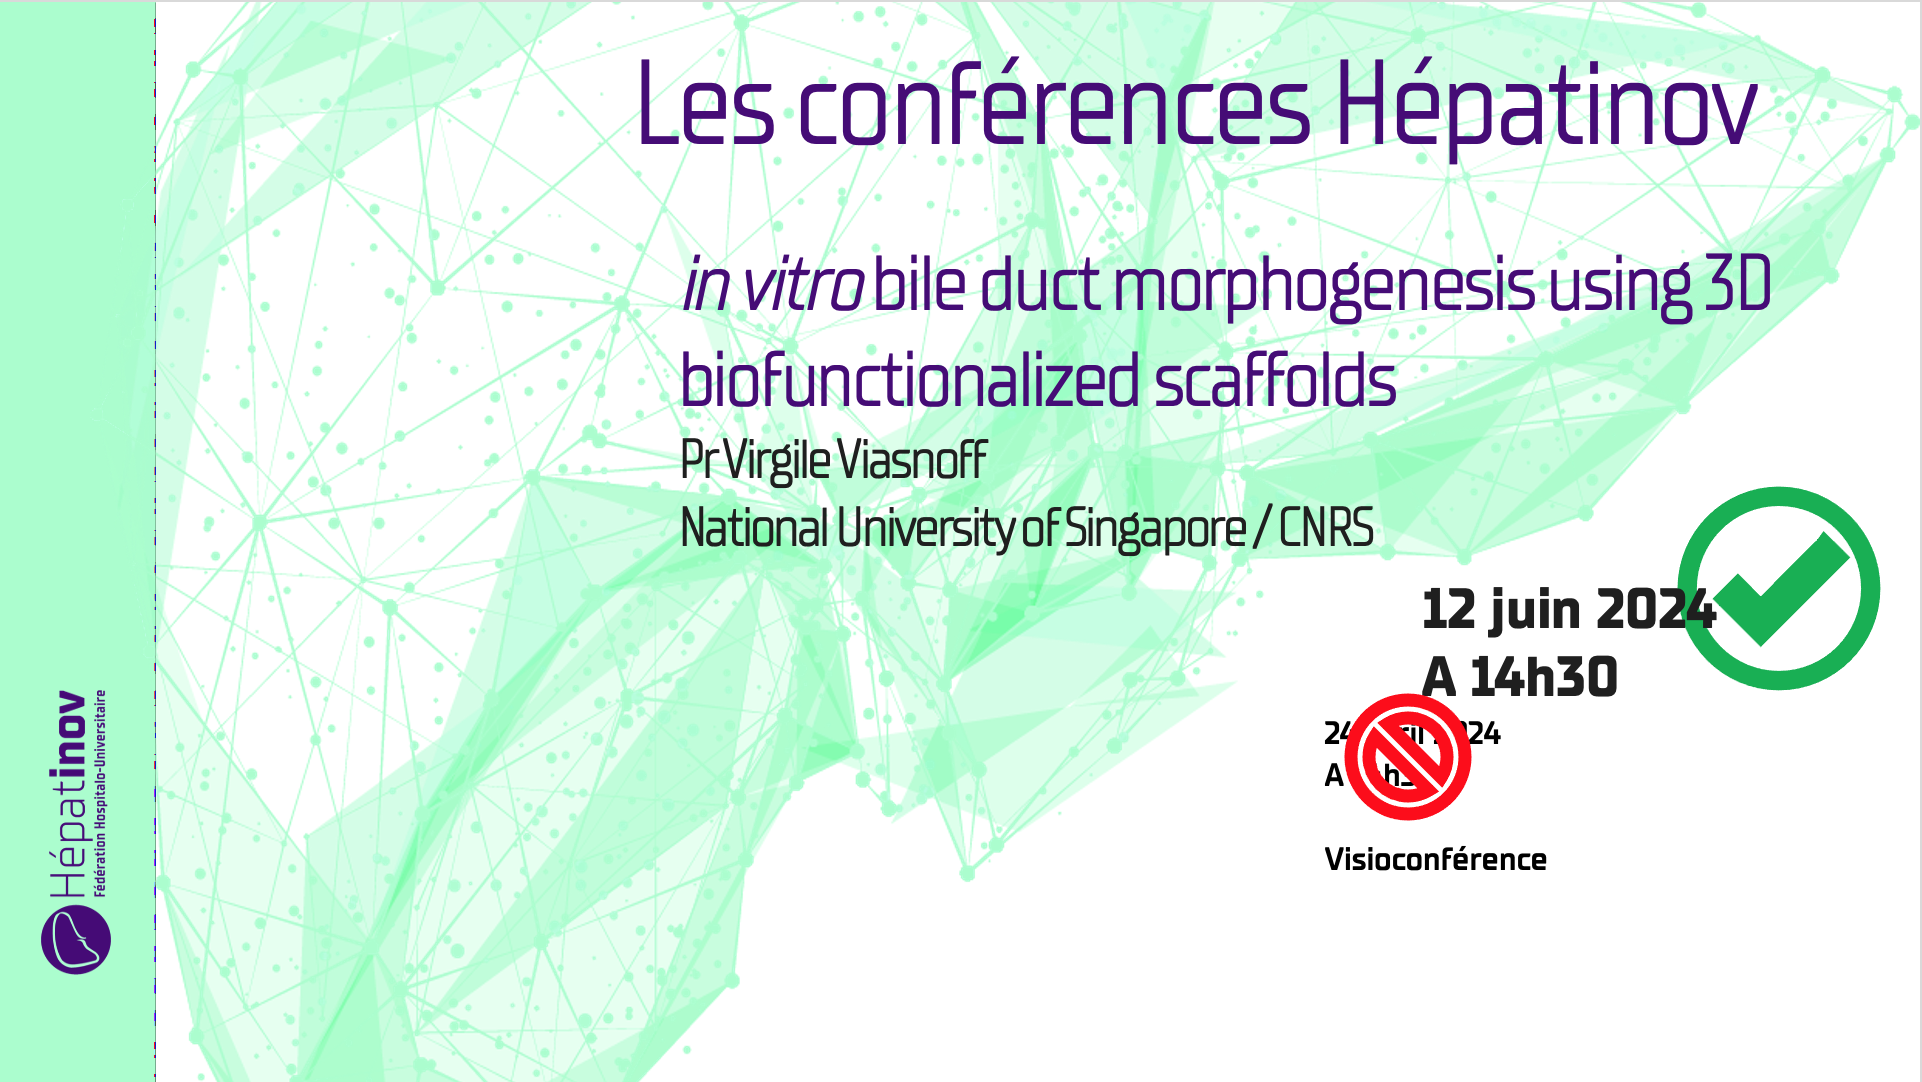 Les conférences Hépatinov - in vitro bile duct morphogenesis using 3D biofunctionalized scaffolds - 24 avril 2024